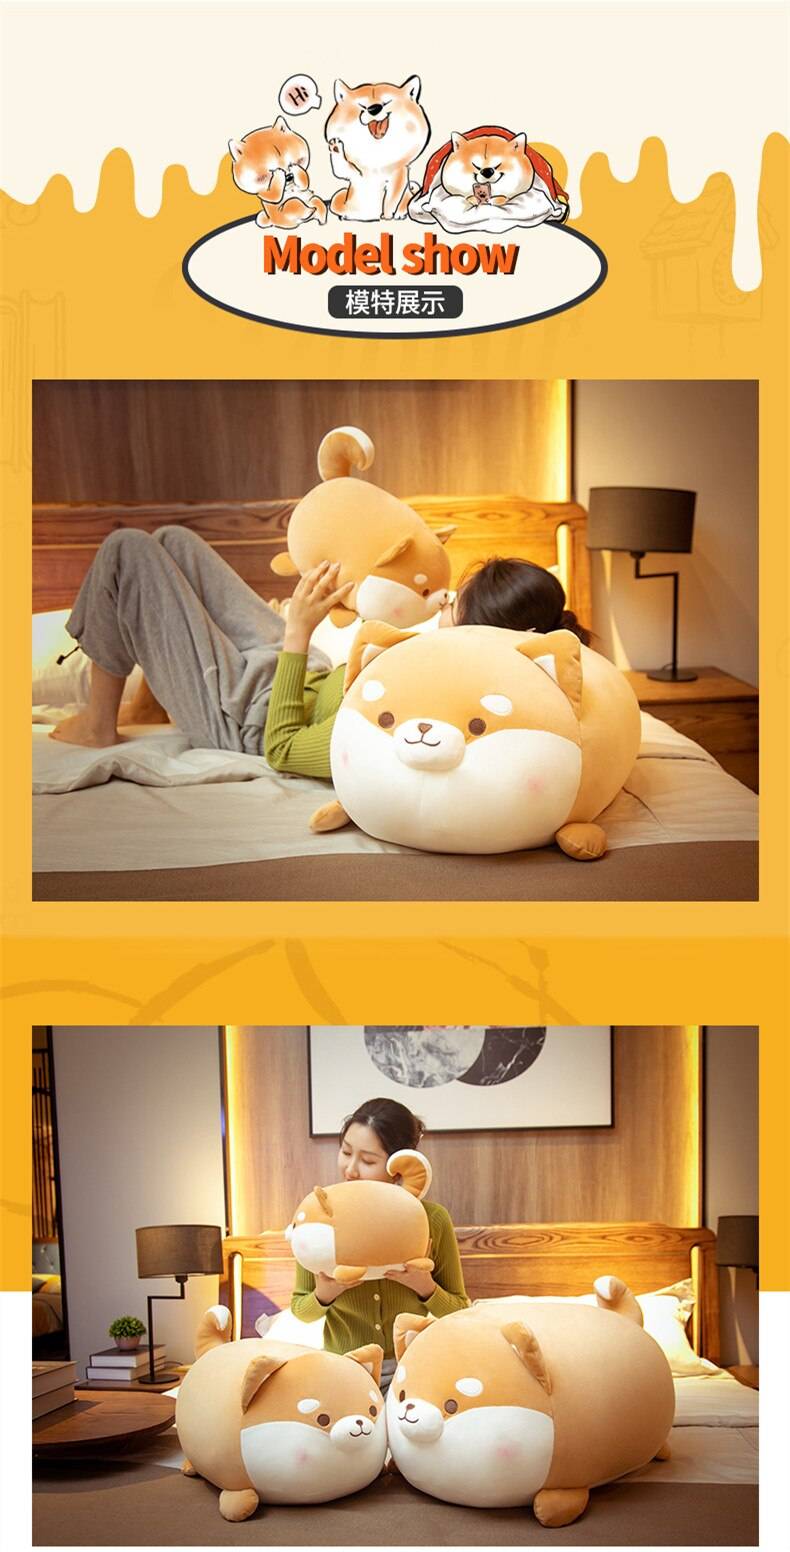 Fat Shiba Inu Plush Toys Cartoon Animal Pillow Lovely Dog Dolls Stuffed Soft Cushion Gift